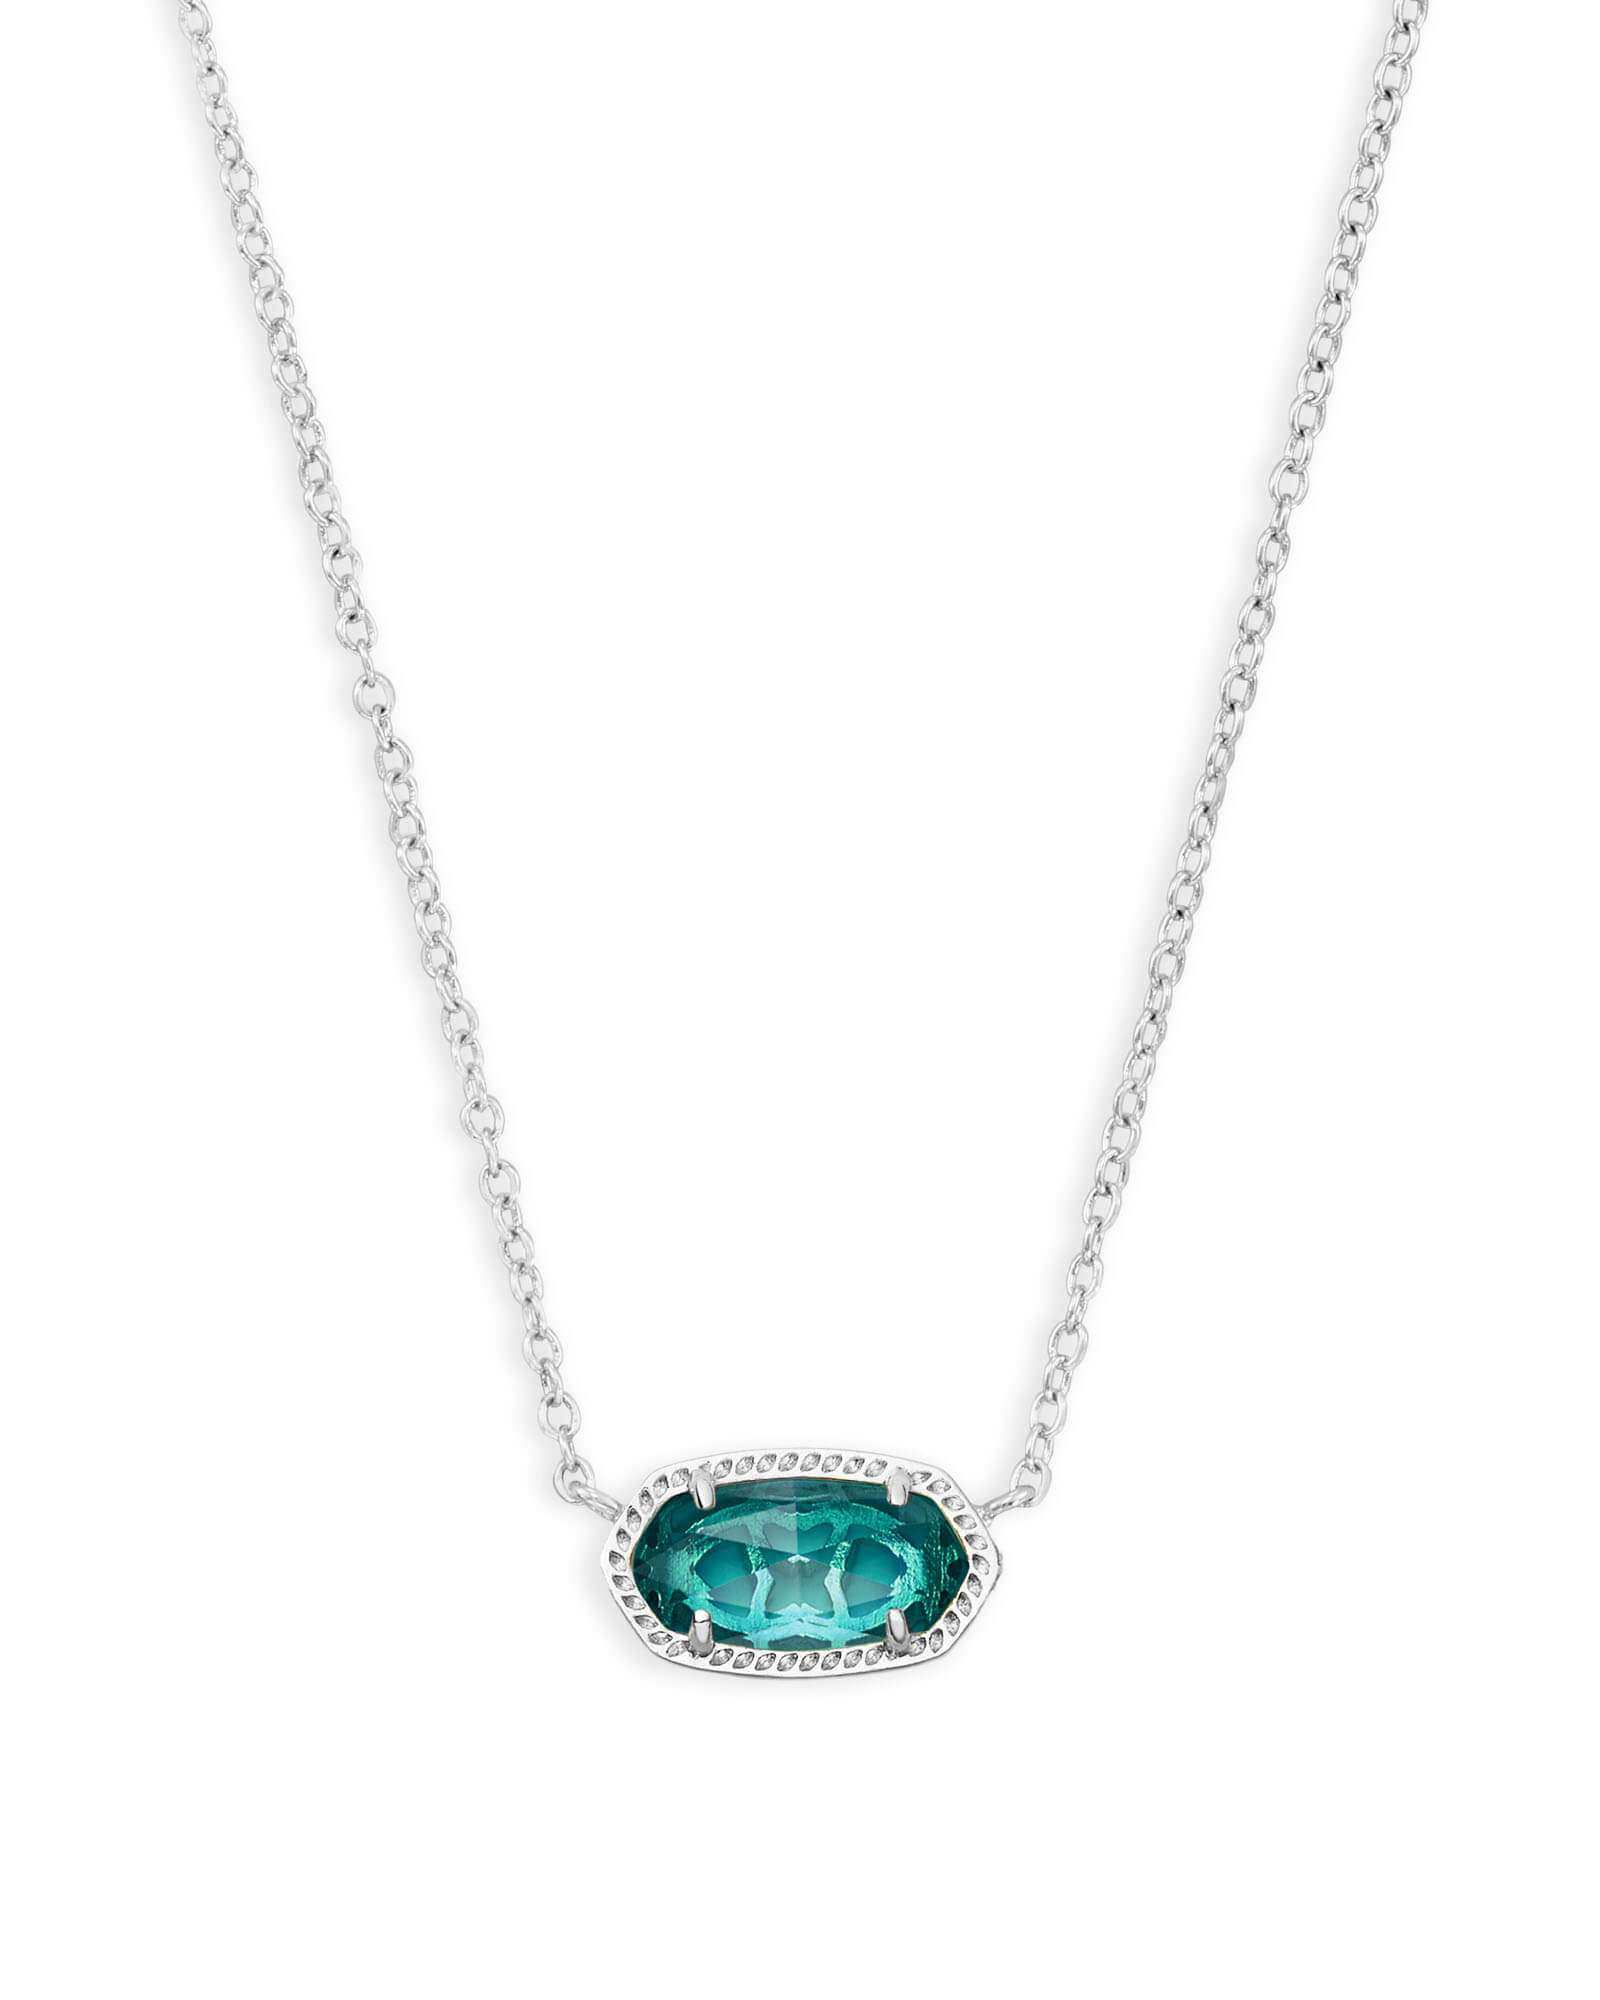 Blue Diamond Necklace Set - Party Necklace - Gift for Wedding - Melina  Luxury Necklace Set by Blingvine